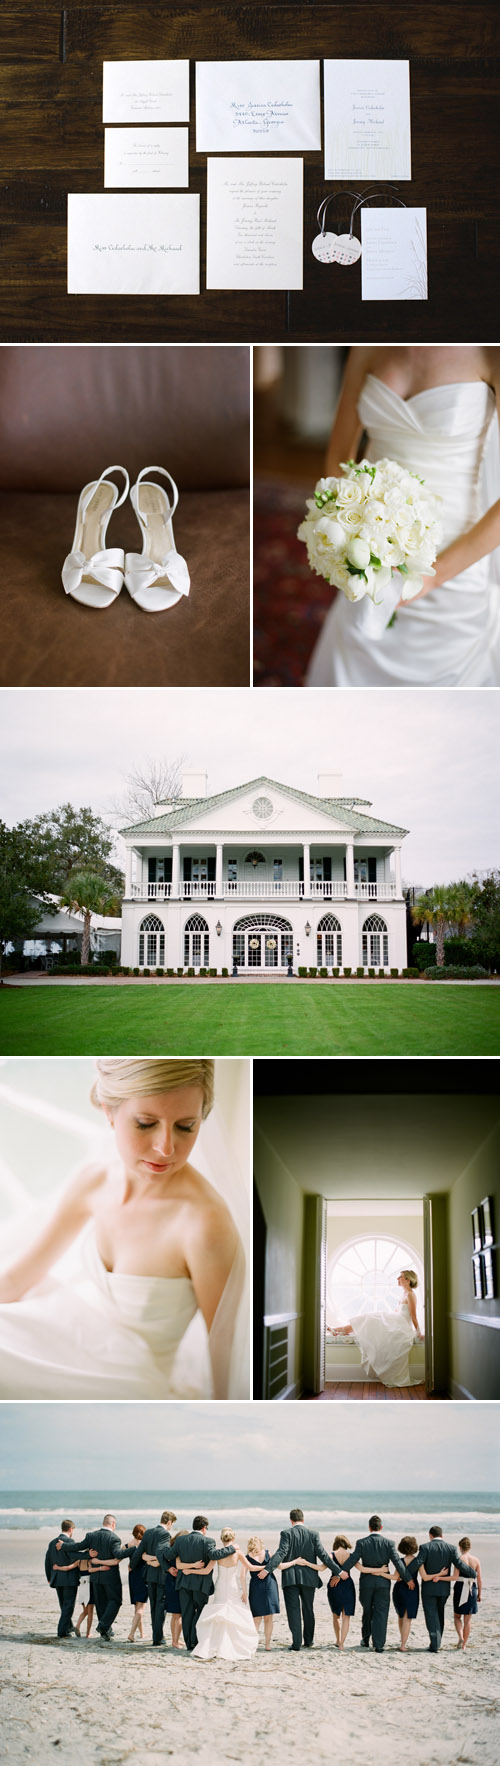 Charleston, South Carolina wedding at Lowndes Grove Plantation, navy, gray, pink and ivory wedding color ideas, photos by Virgil Bunao Photography